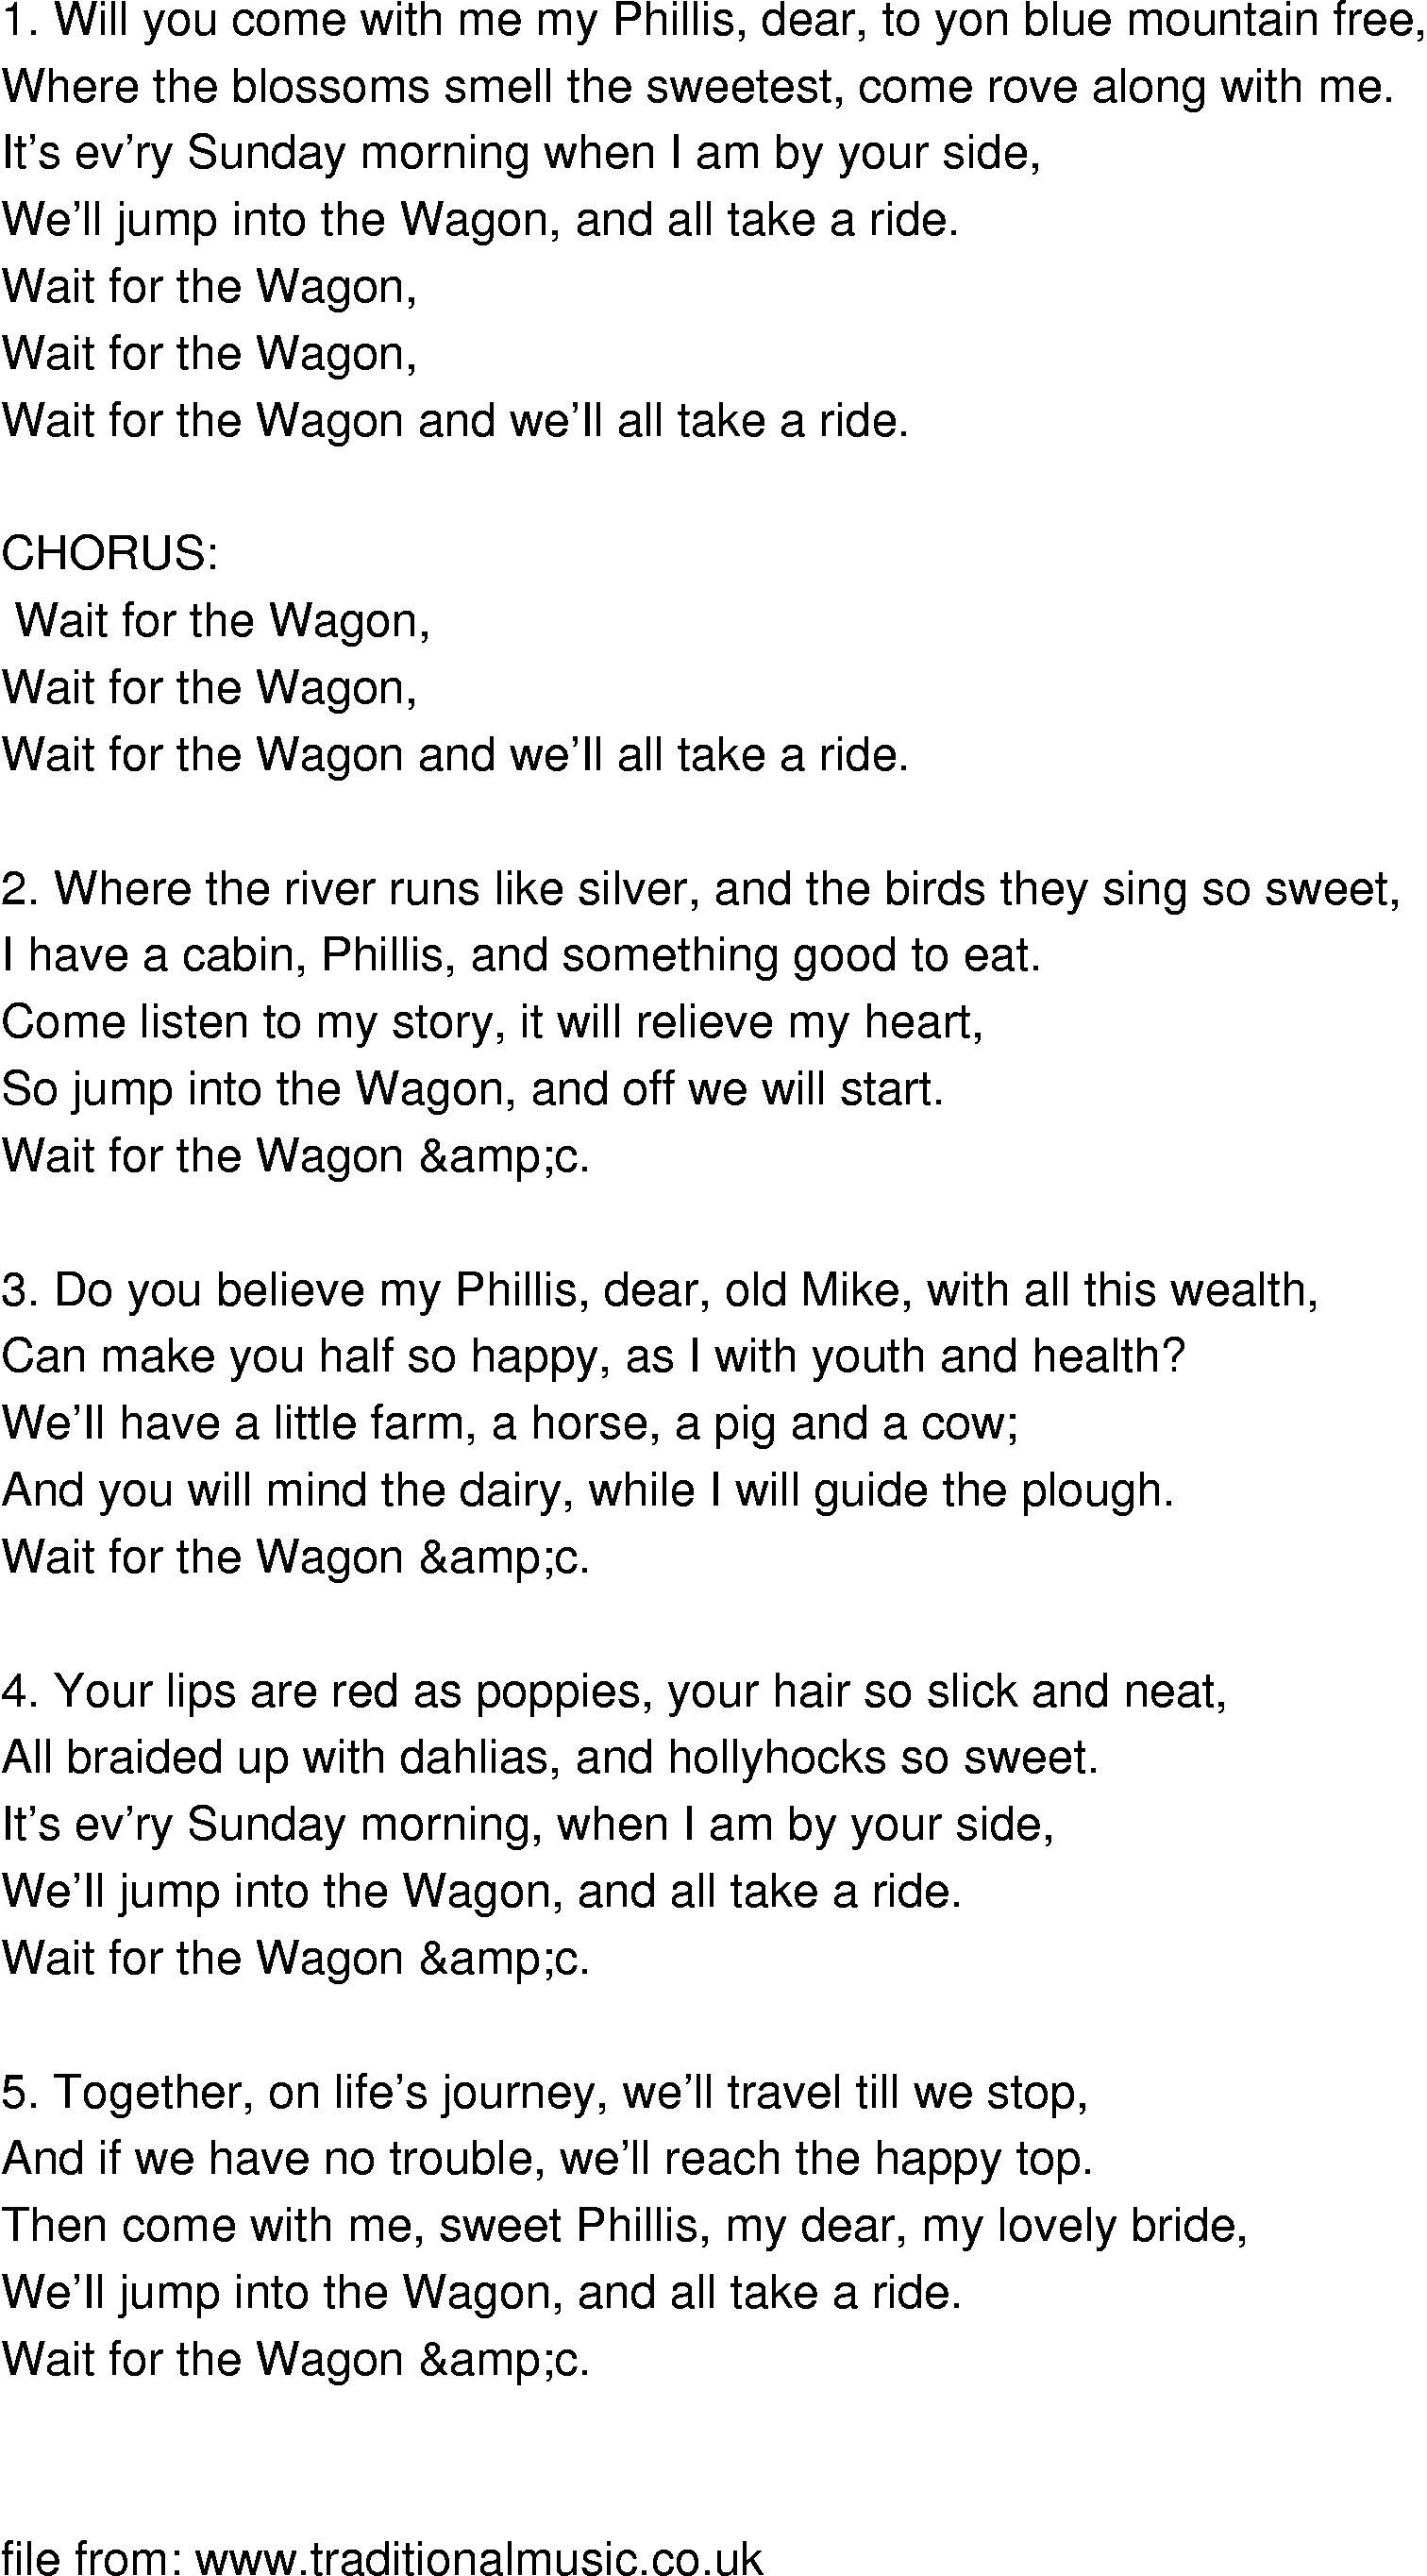 Old-Time (oldtimey) Song Lyrics - wait for the wagon